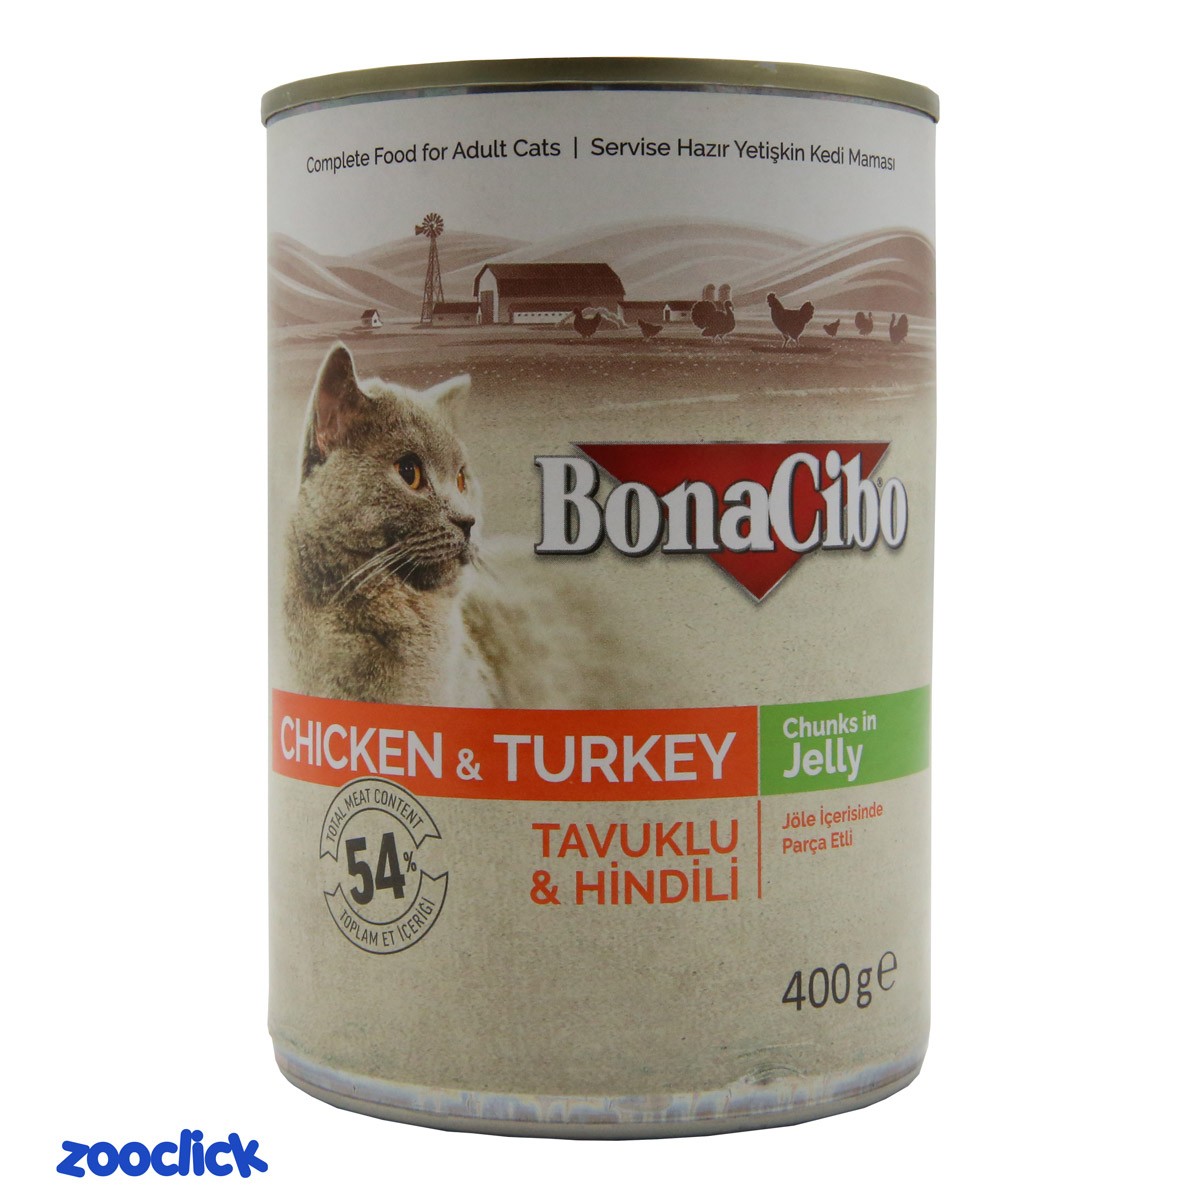 bonacibo adult cat food with chicken & turkey کنسرو گربه بوناسیبو با طعم مرغ و بوقلمون